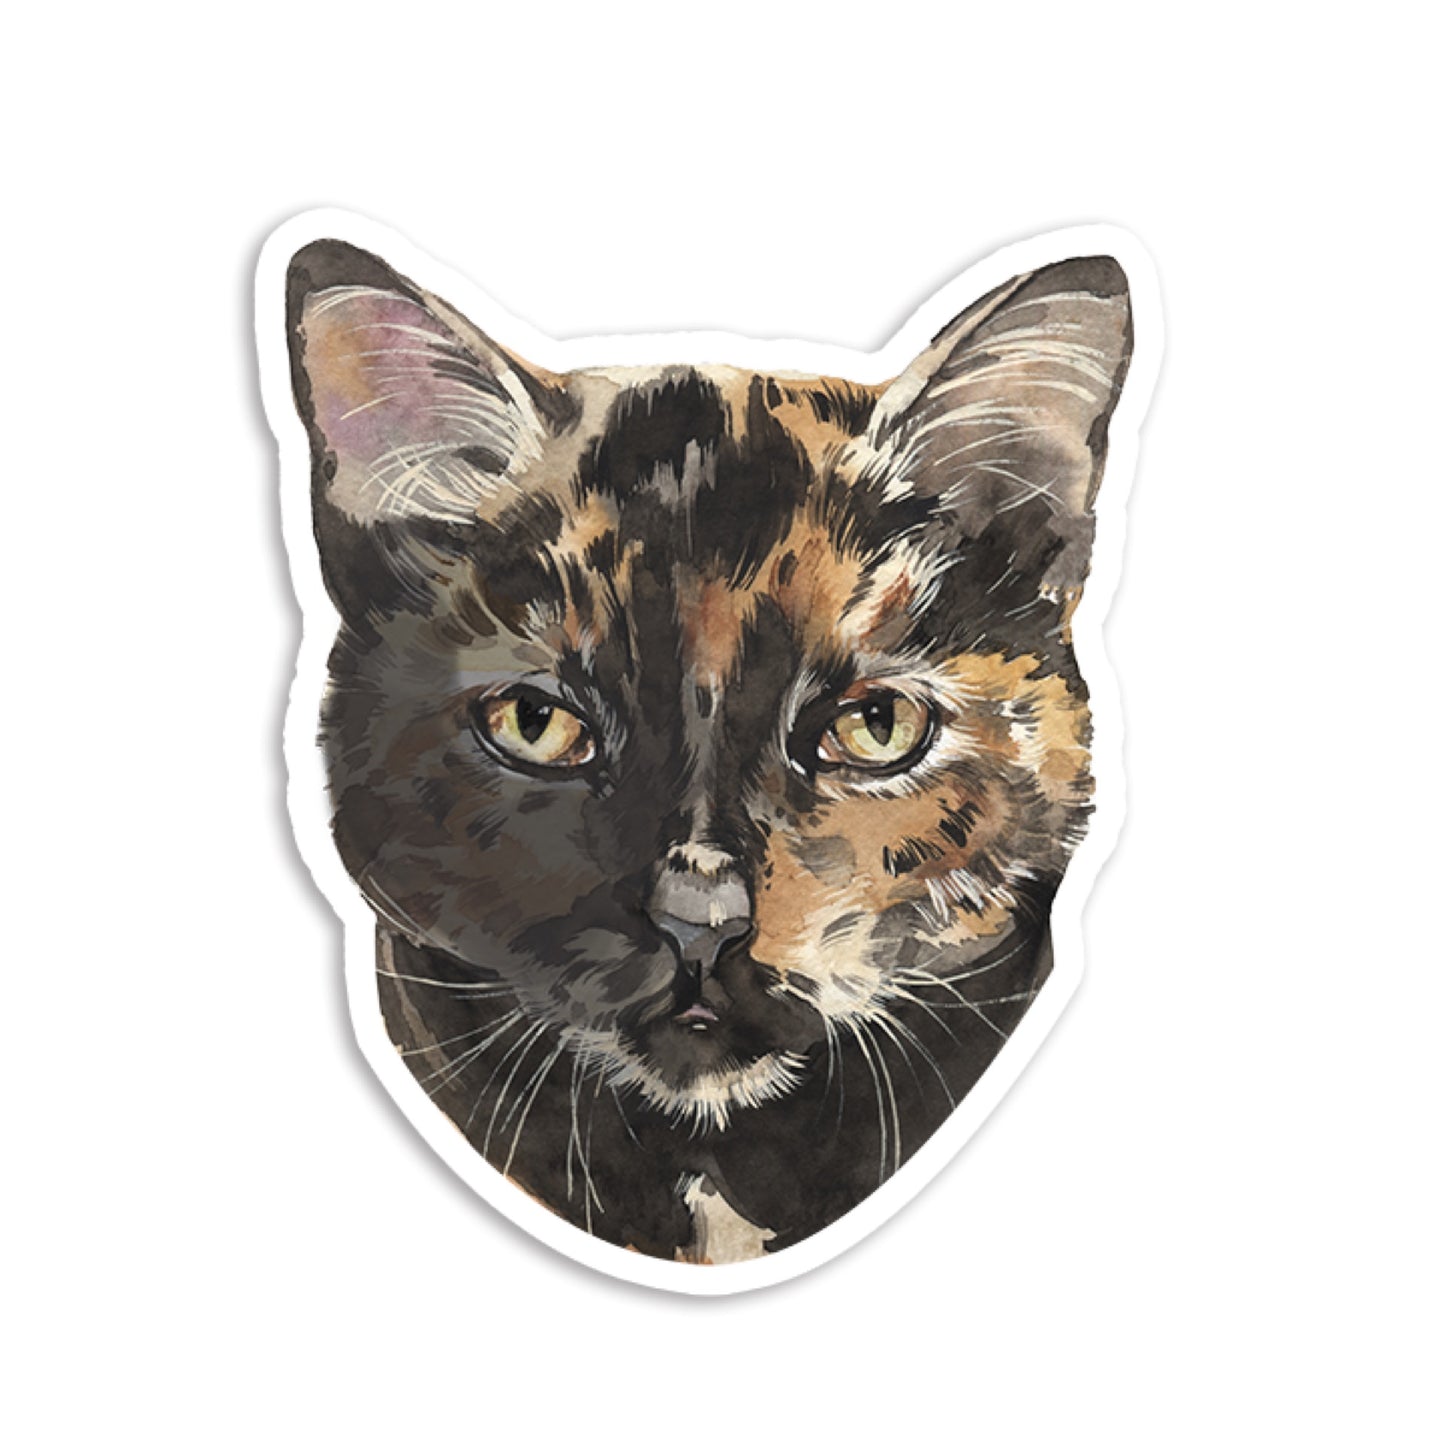 Kitty Town Coffee Sticker - Tortoiseshell Tortie Cat “Mika”